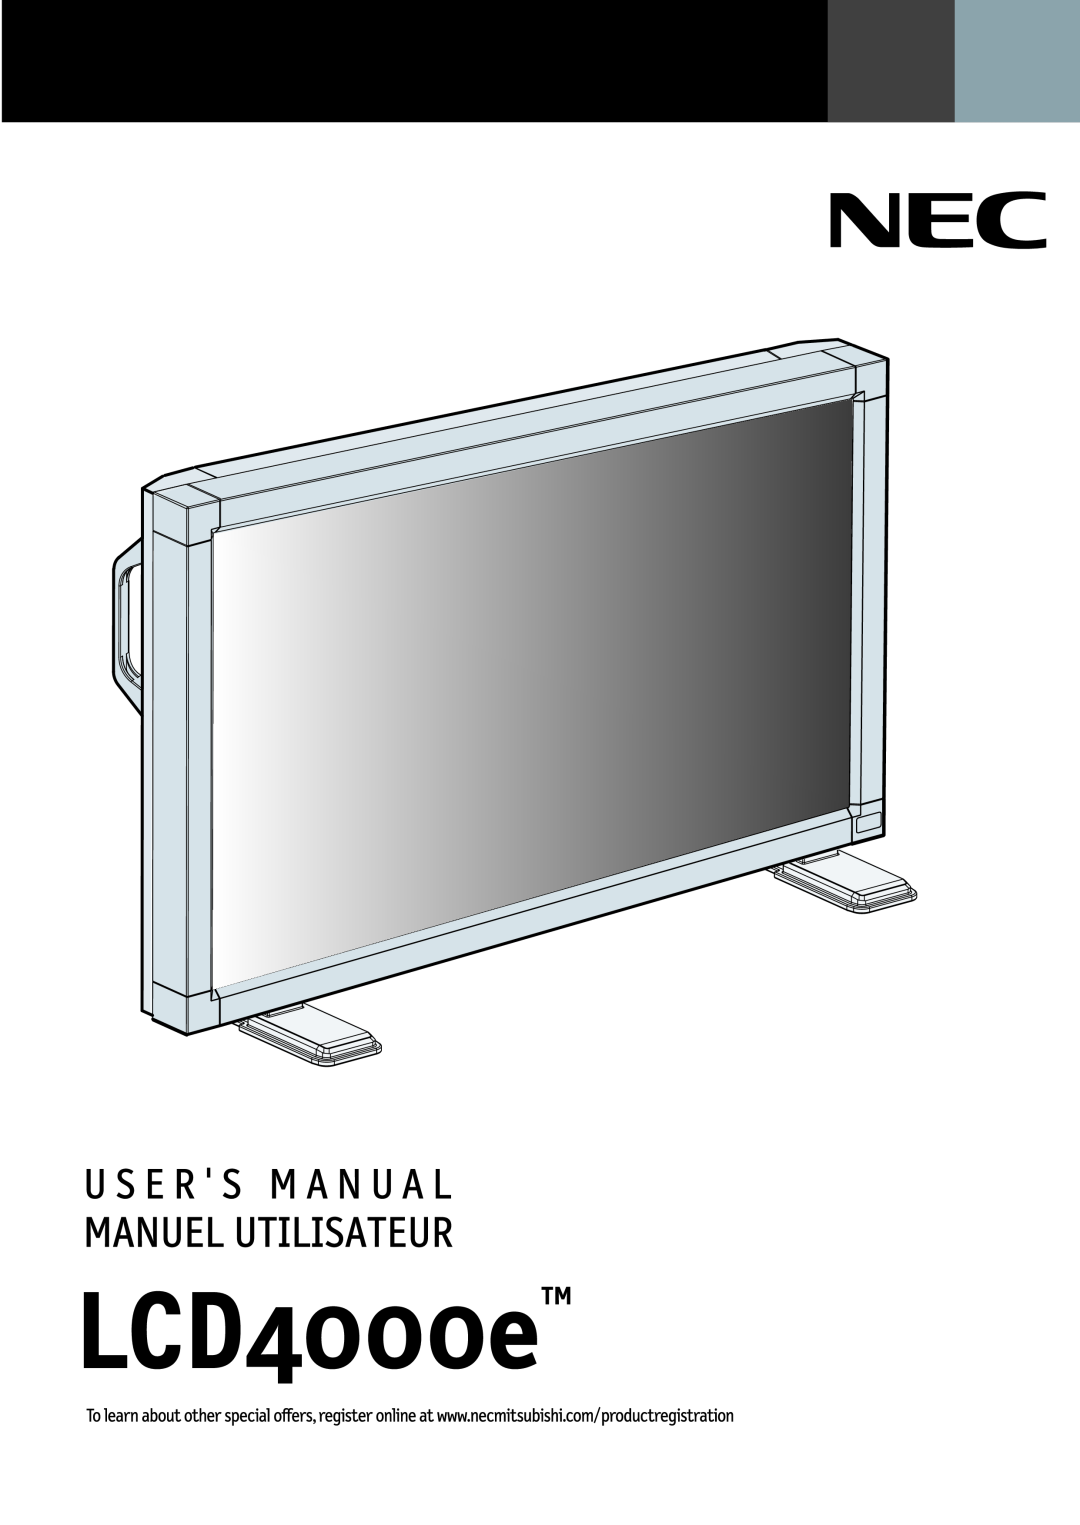 NEC LCD4000e manual 